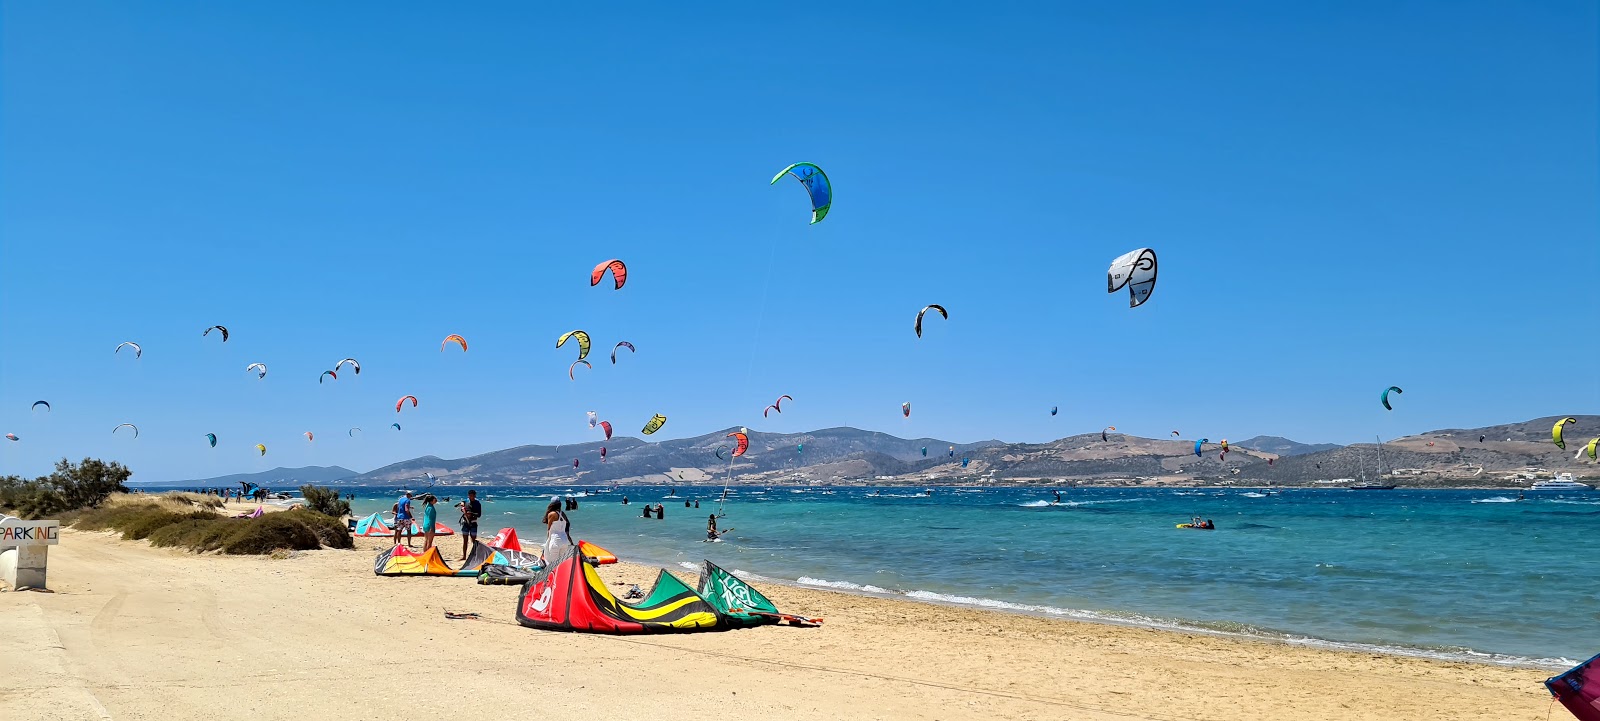 Foto de Paros Kite beach con playa amplia